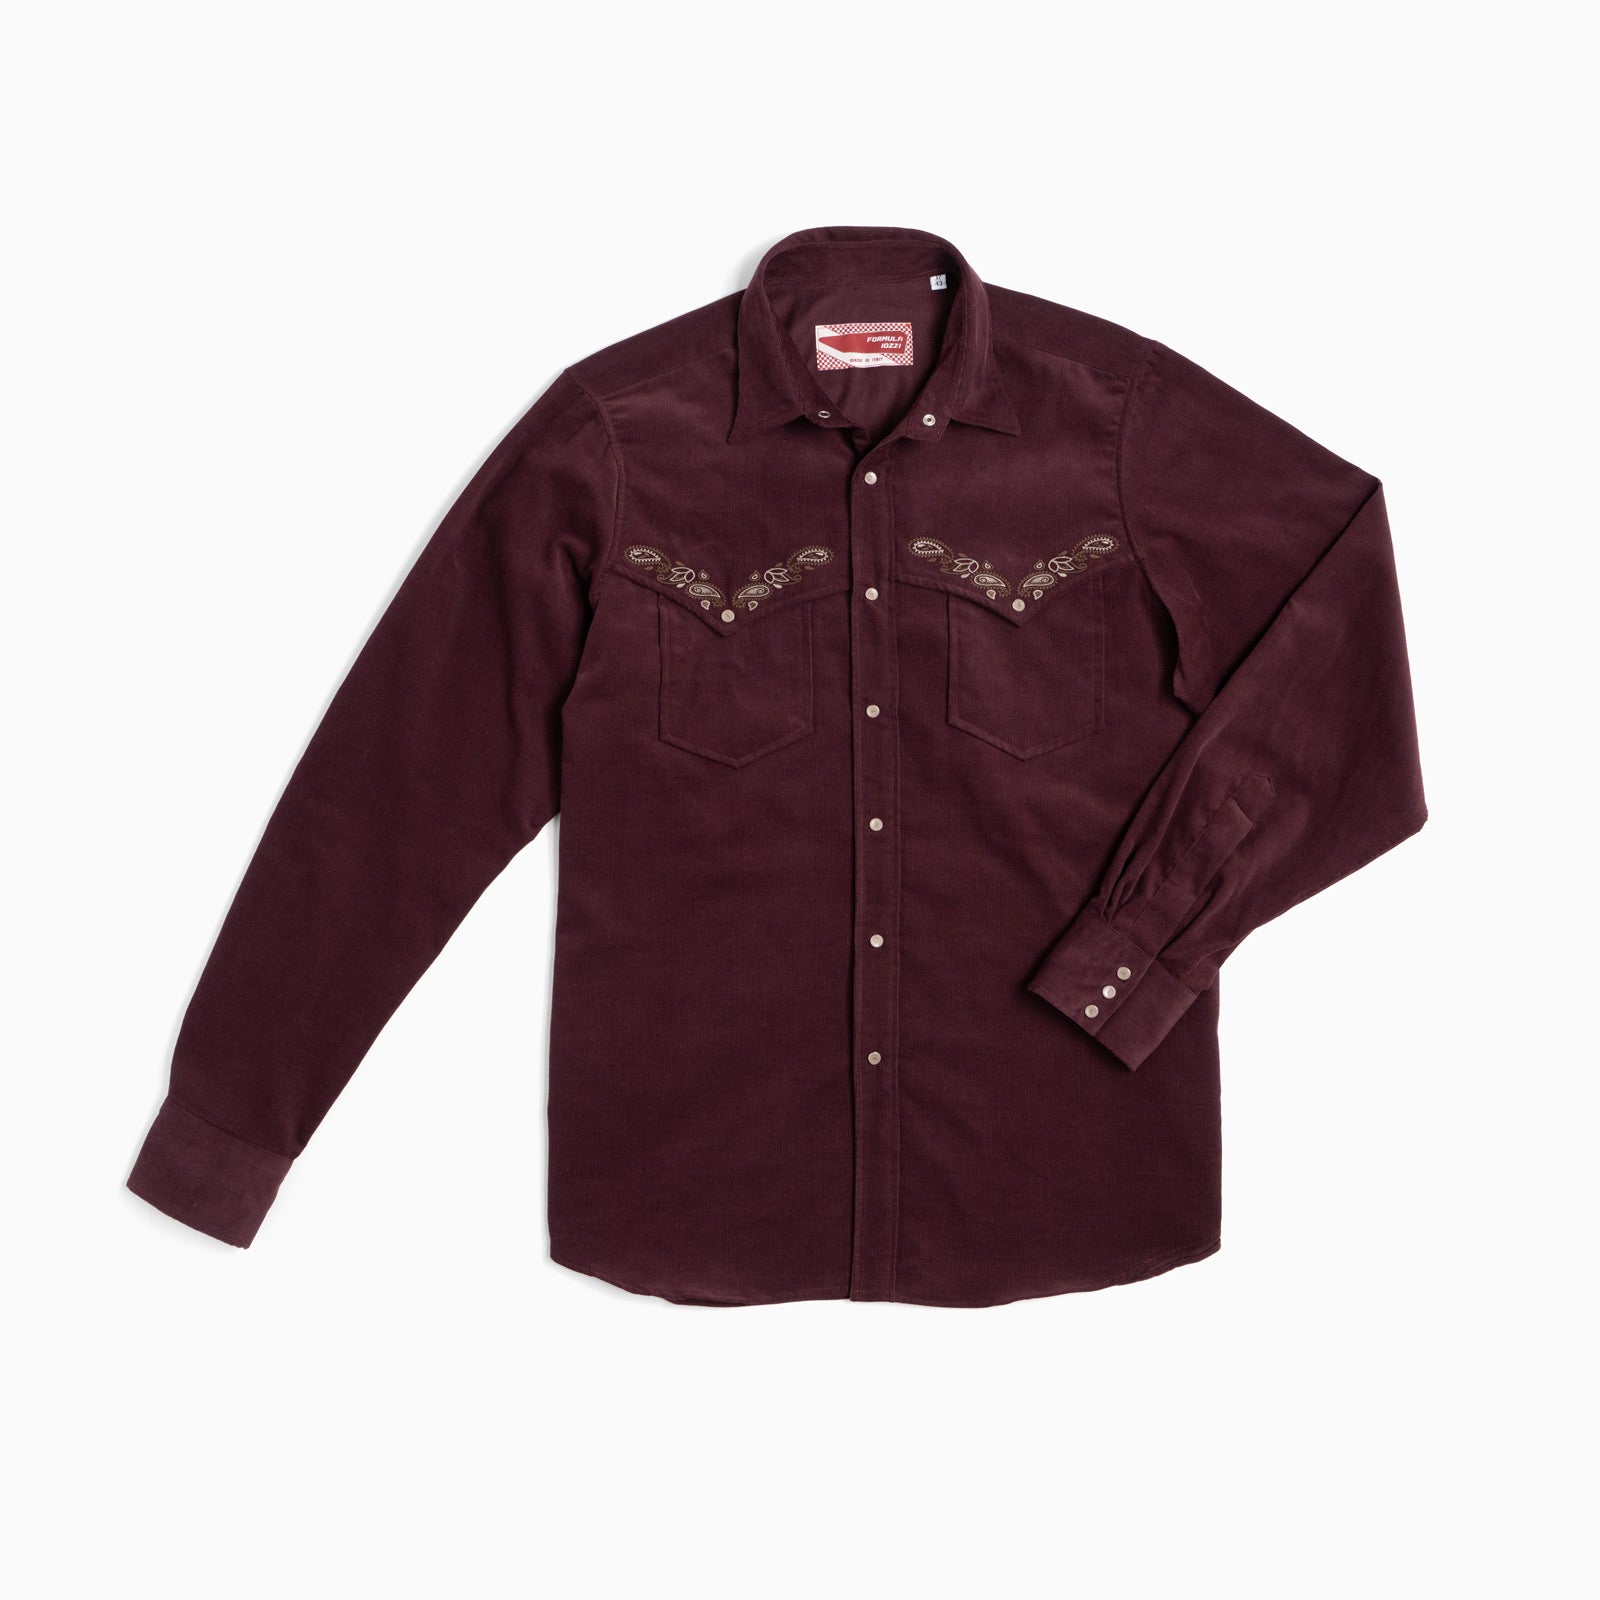 Texan Shirt - Burgundy Paisley Corduroy